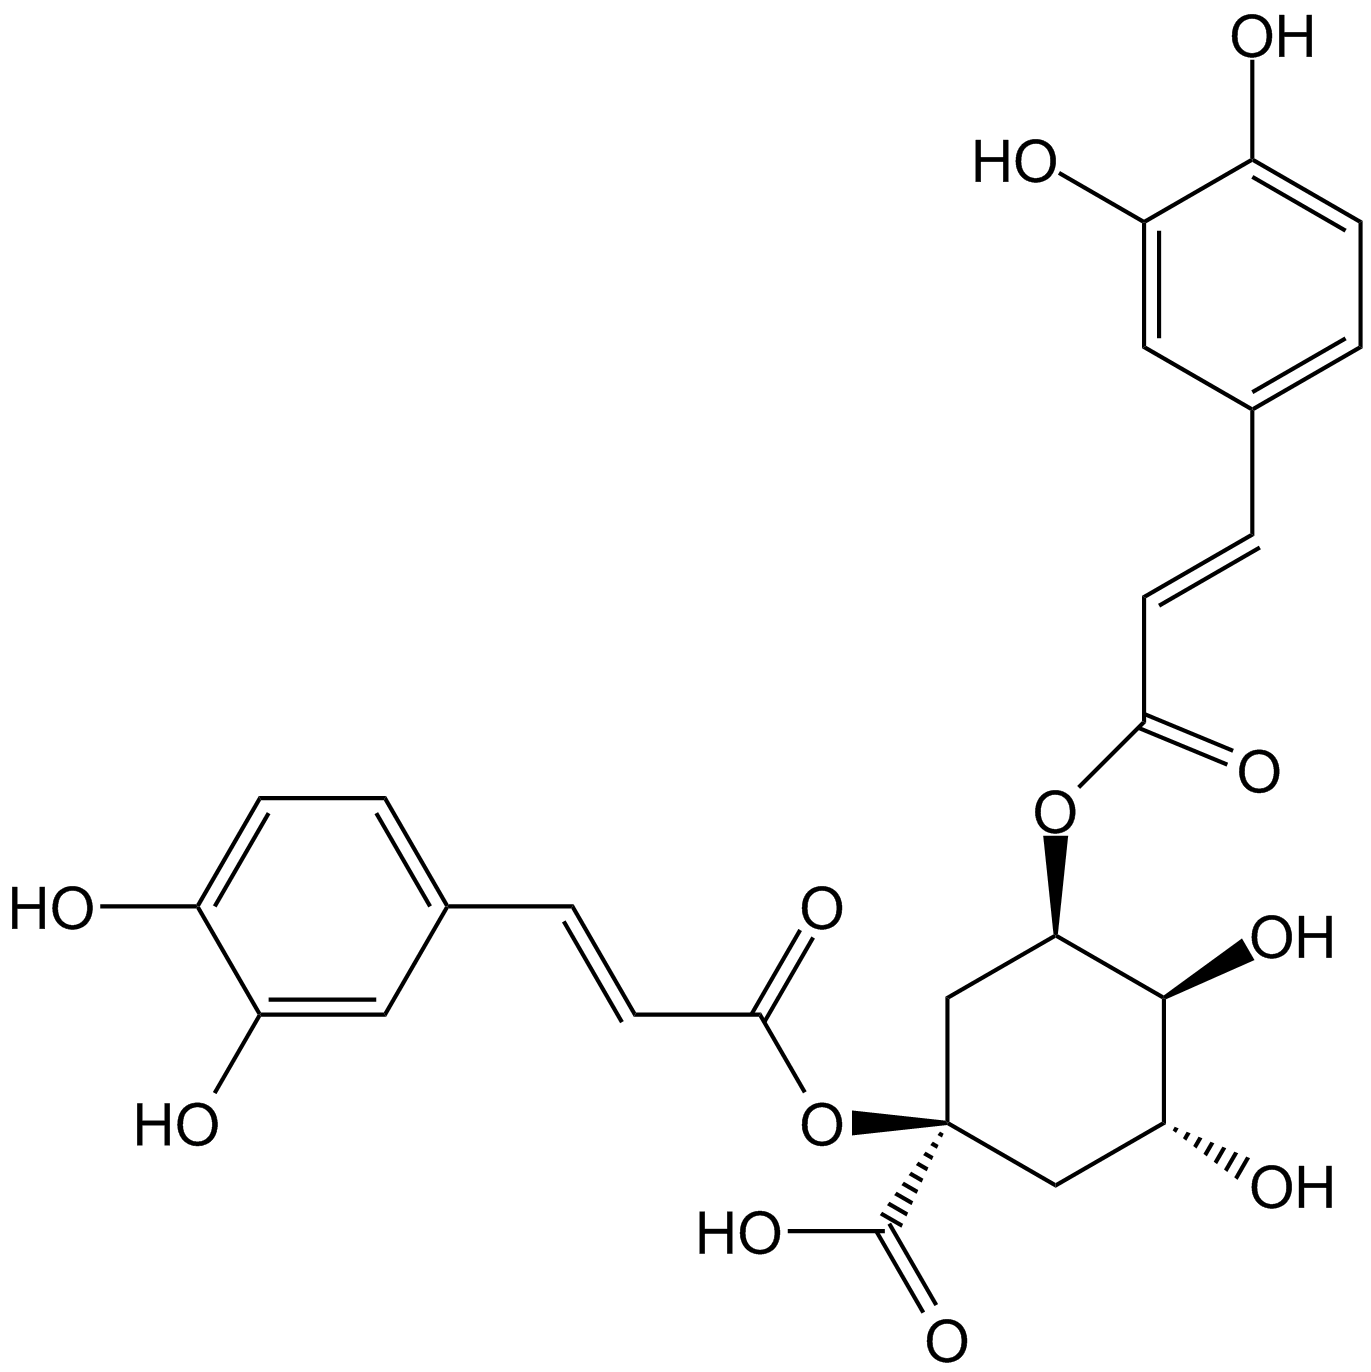 1,5-Dicaffeoylquinic acid